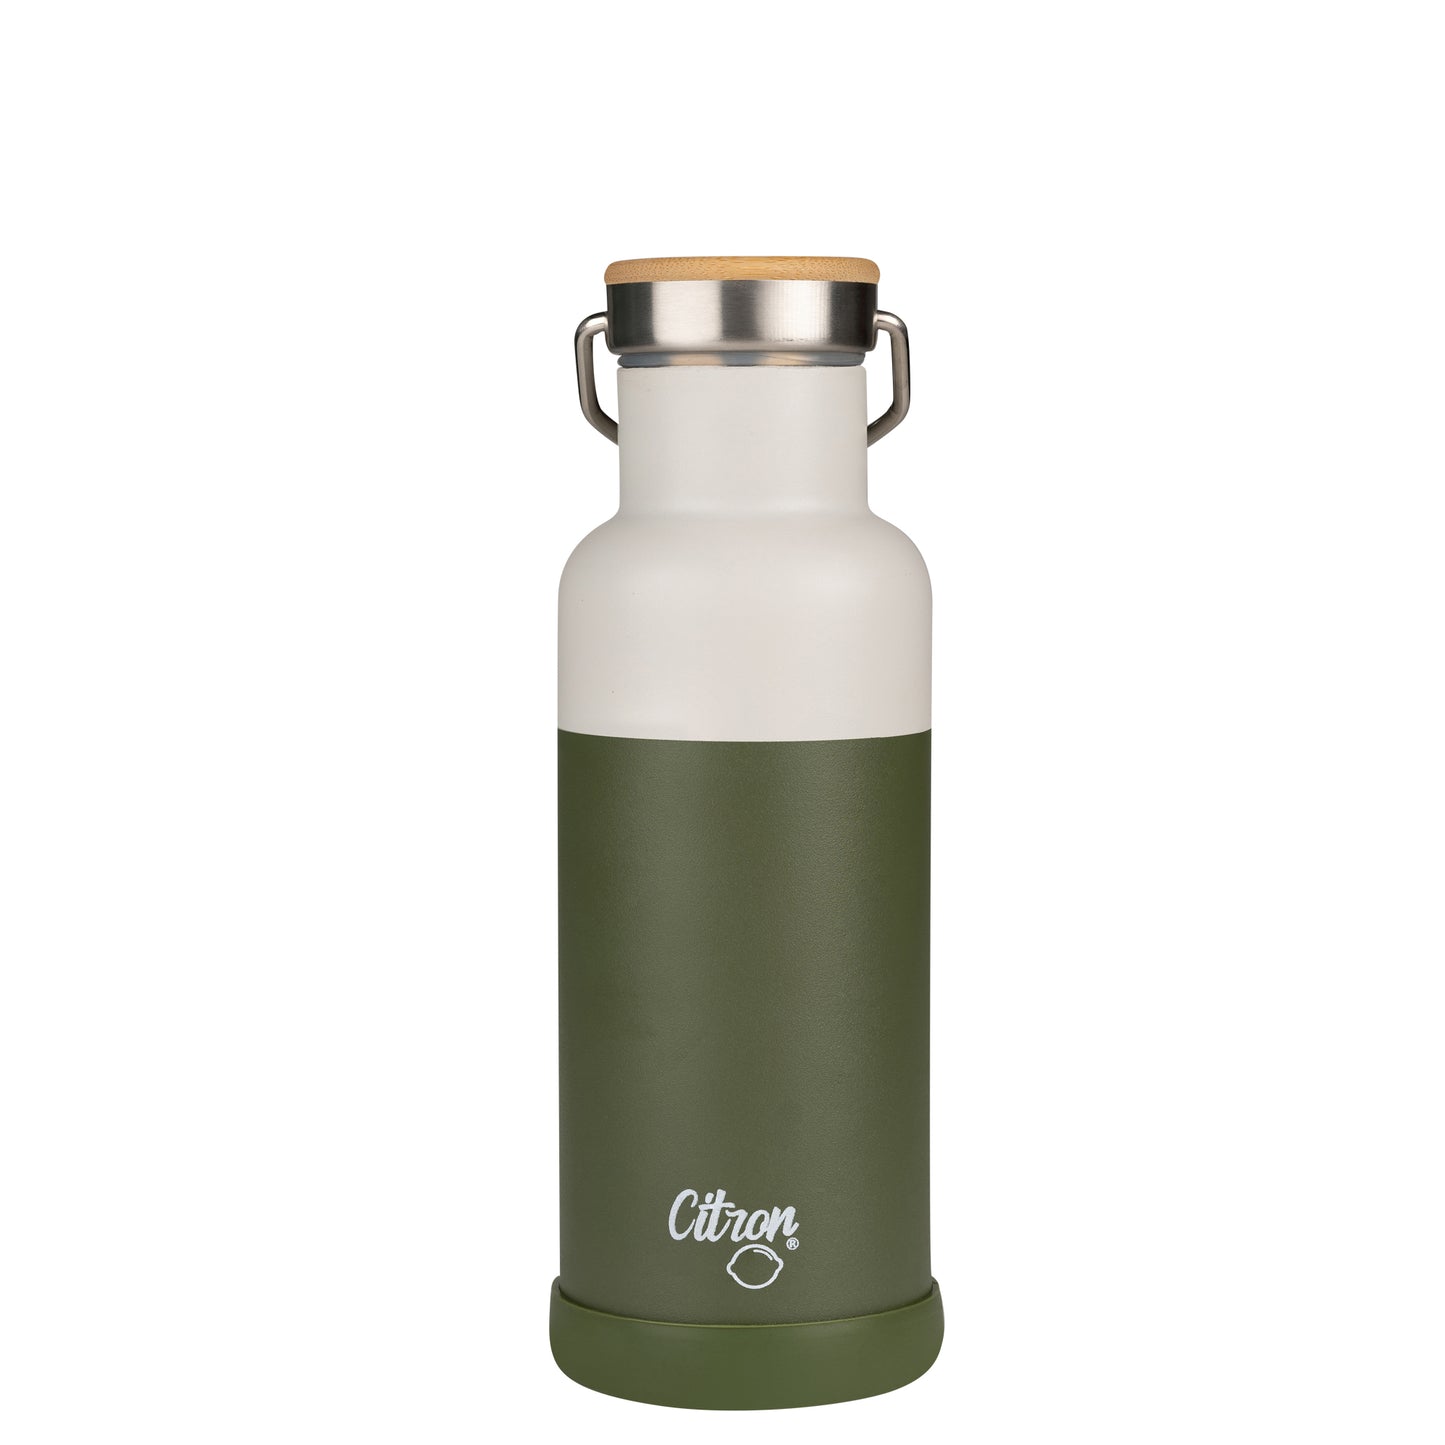 SS Water Bottle 500ml - Olive Green